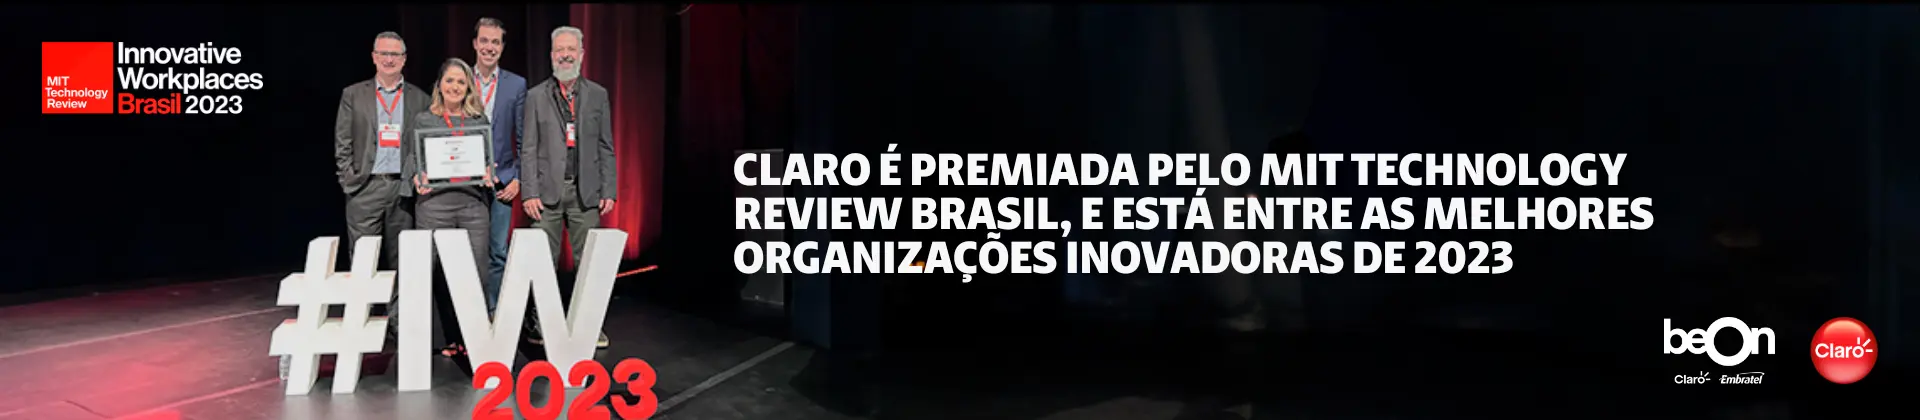 beOn Claro participa do Iançamento do 5G Open Labs Brasil.